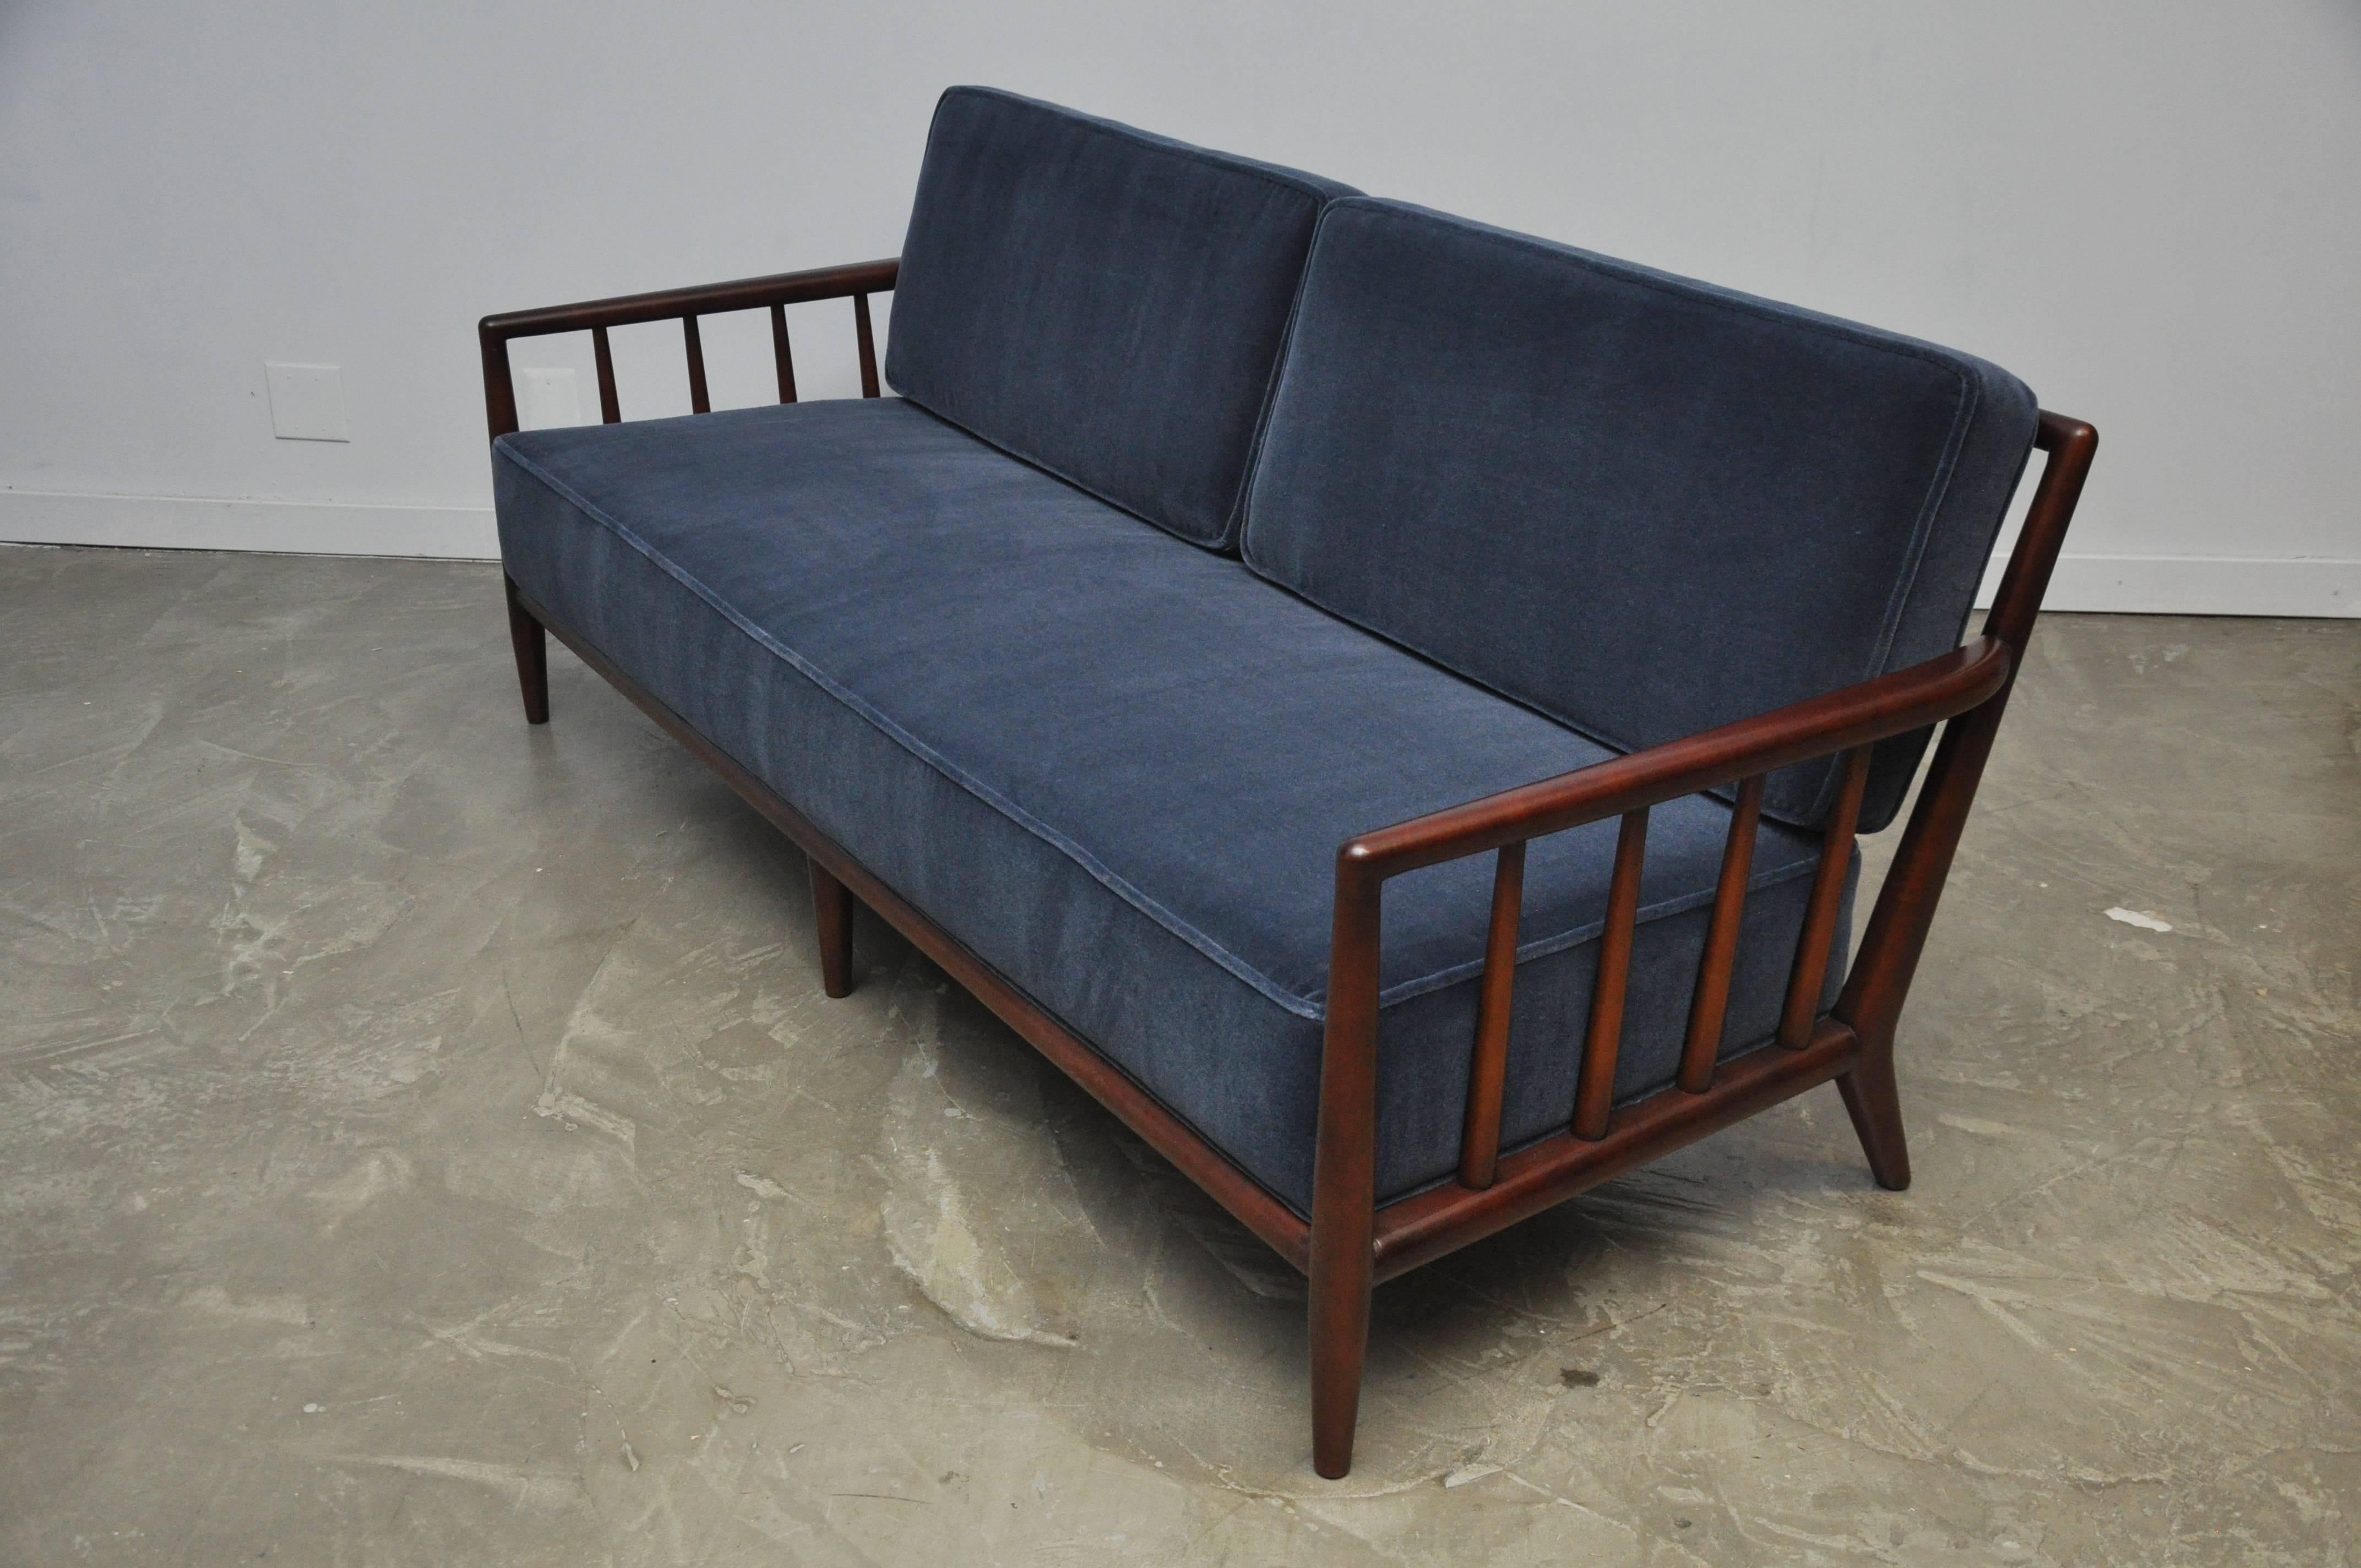 Walnut frame sofa by T.H. Robsjohn-Gibbings. Fully restored, refinished and reupholstered in dark blue mohair.